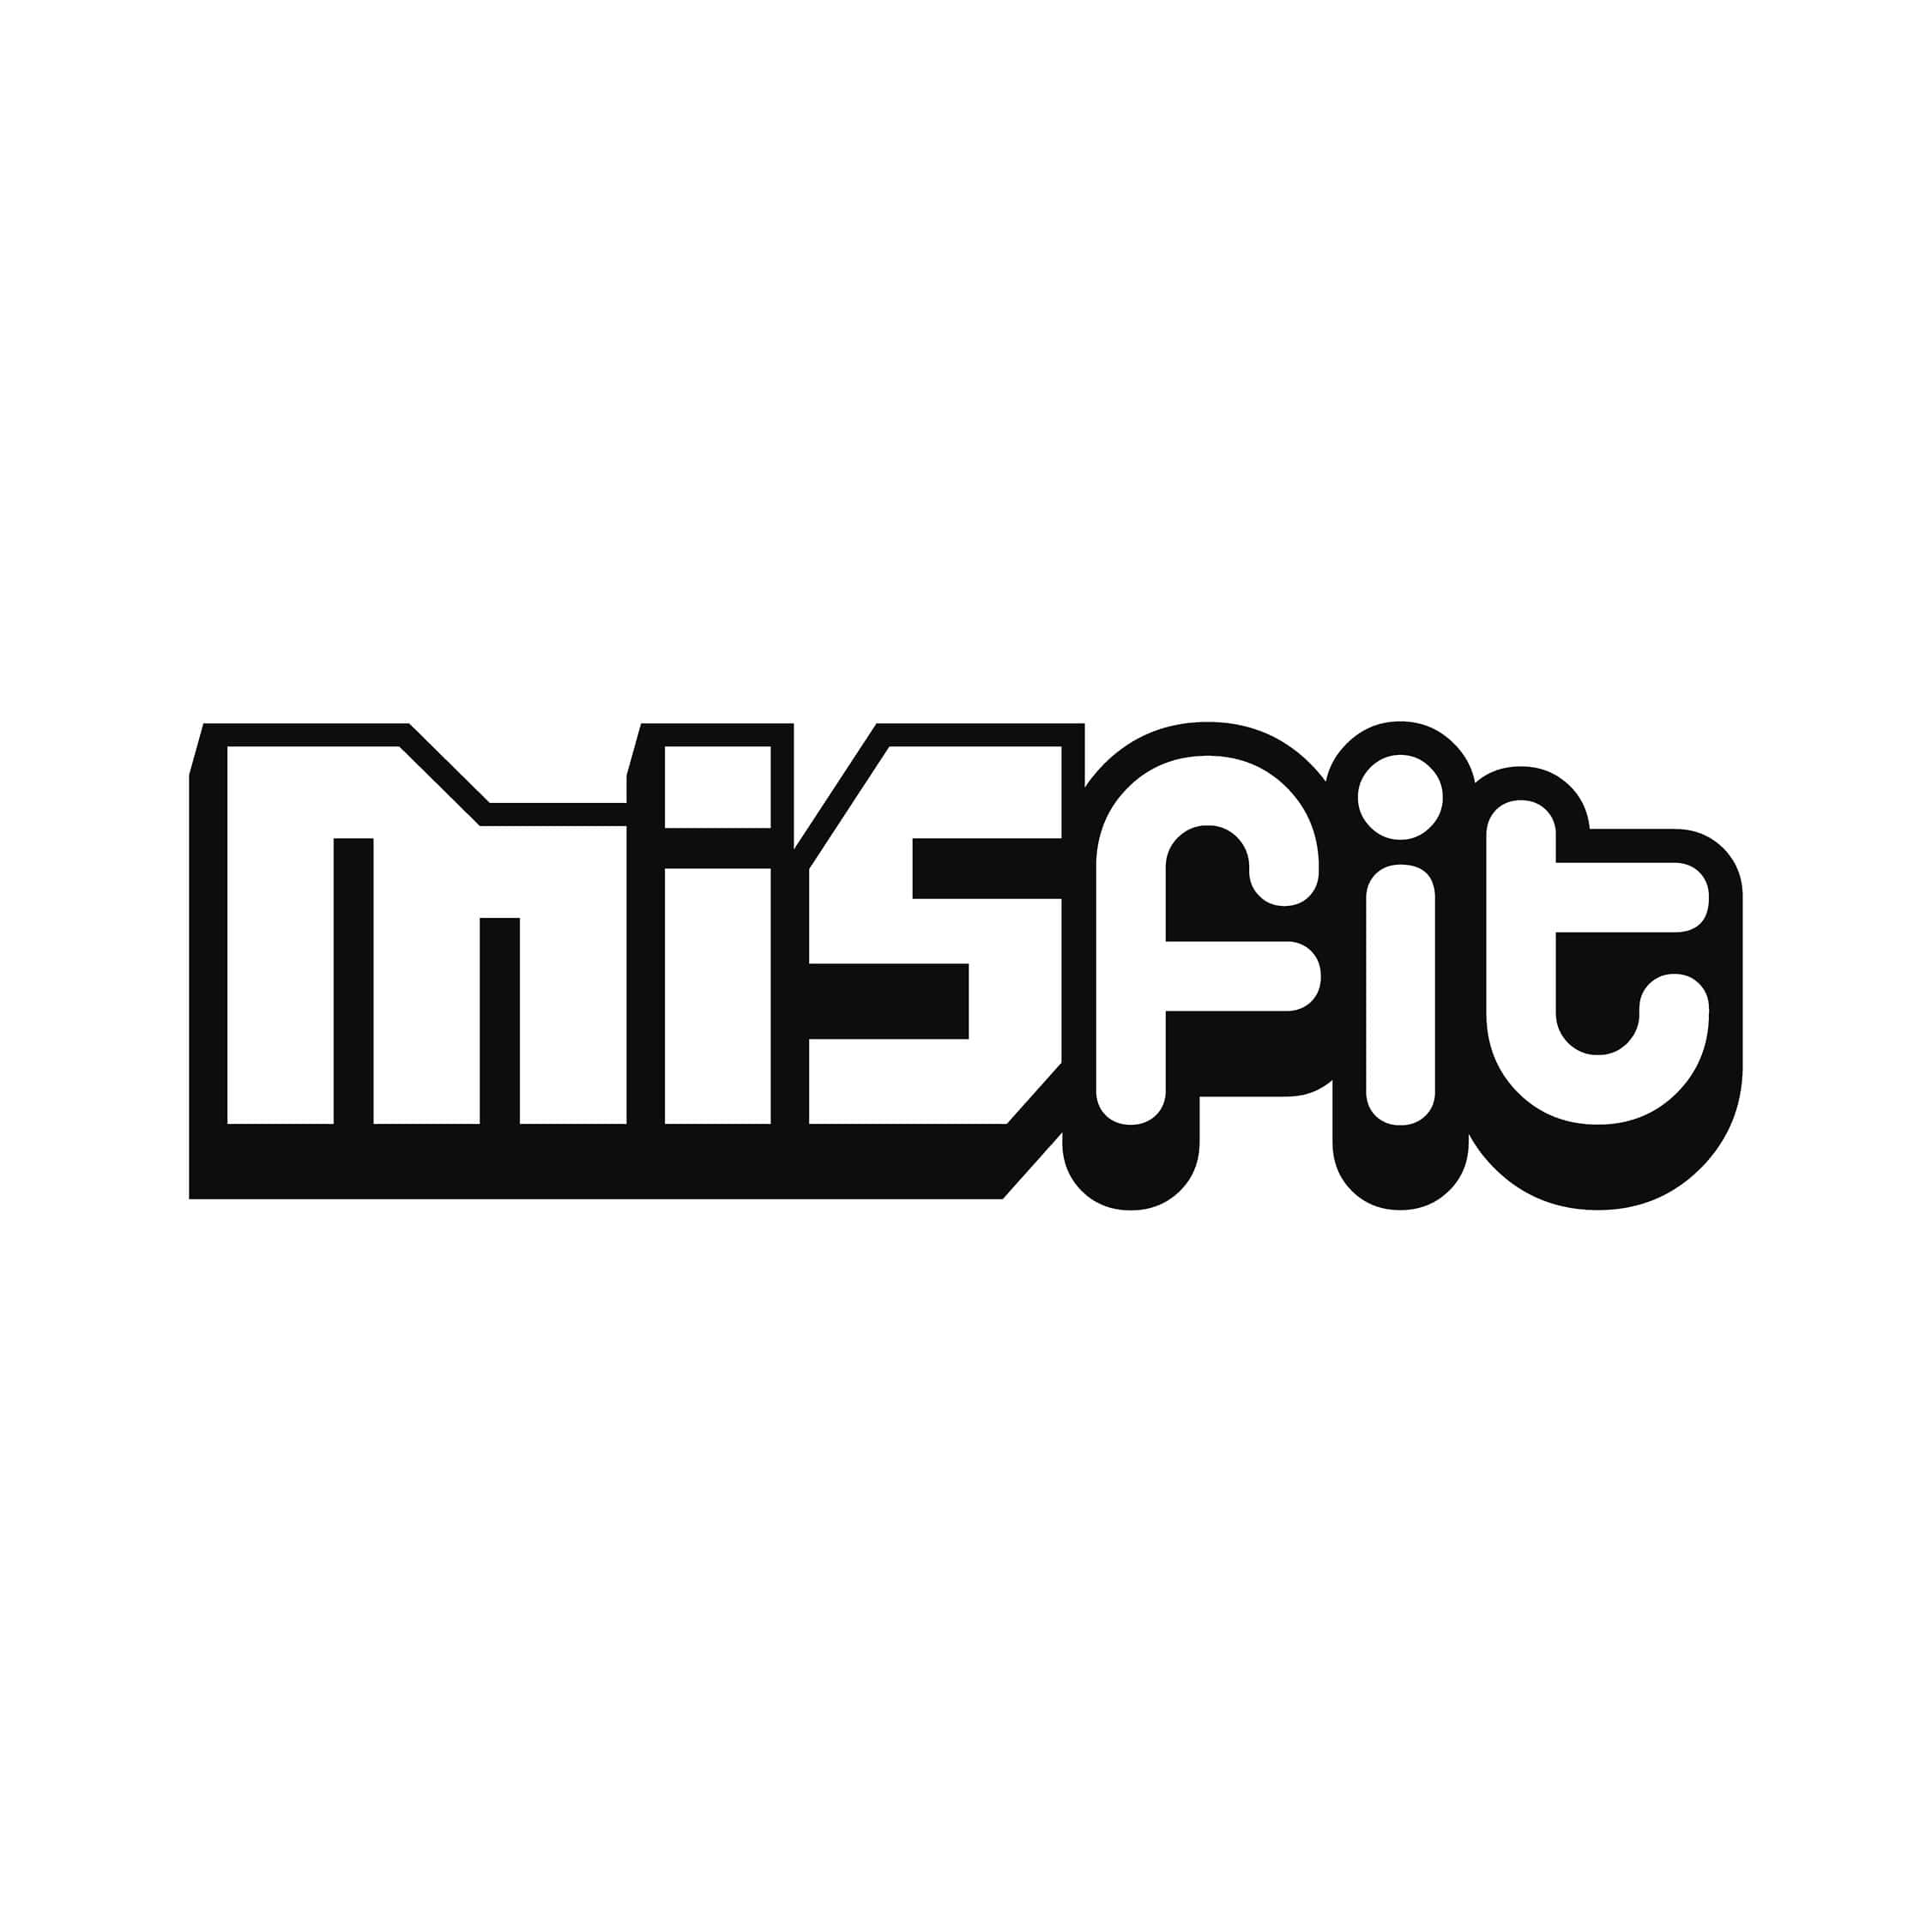 Logo MISFIT du Inktober 2019 (édition logo)